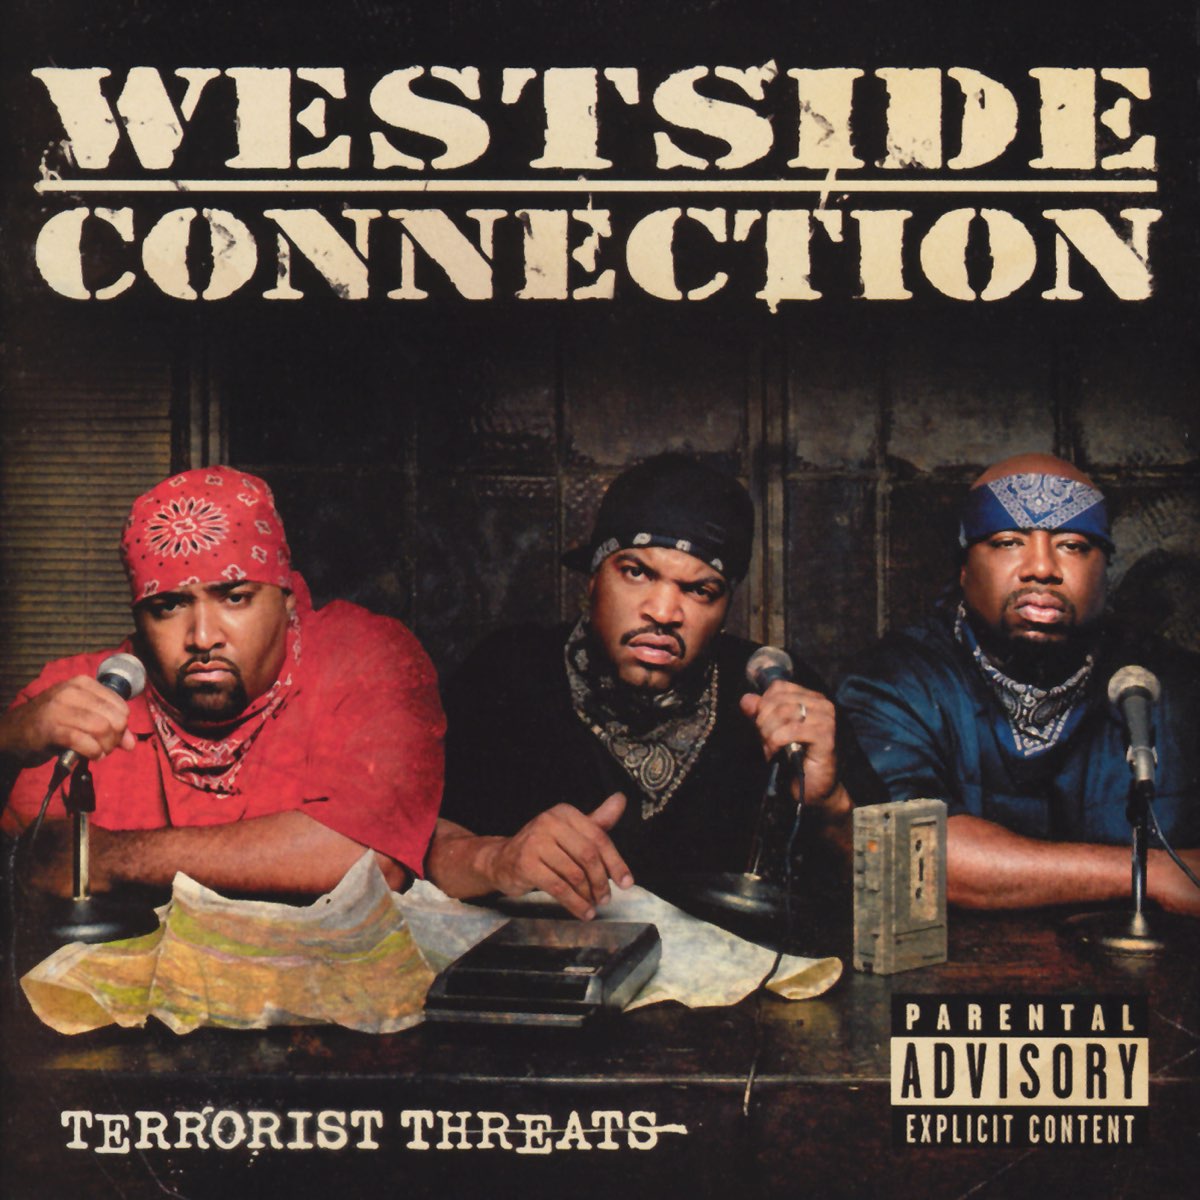 ‎Terrorist Threats - Album by Westside Connection - Apple Music